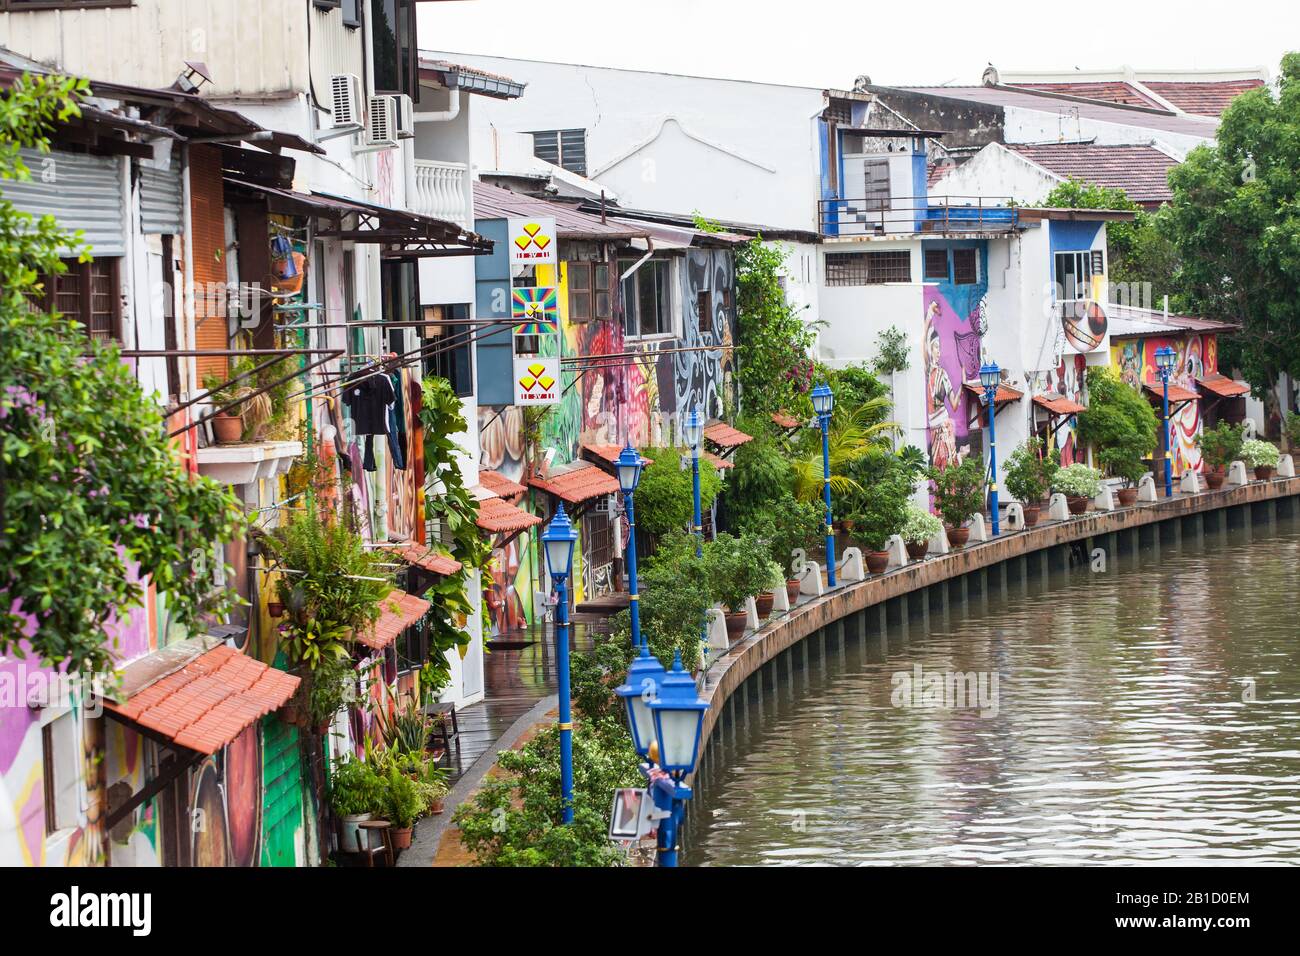 Homes and business along the clean river, district of Kampung Bakar Batu, Malacca or Melaka, Malaysia Stock Photo